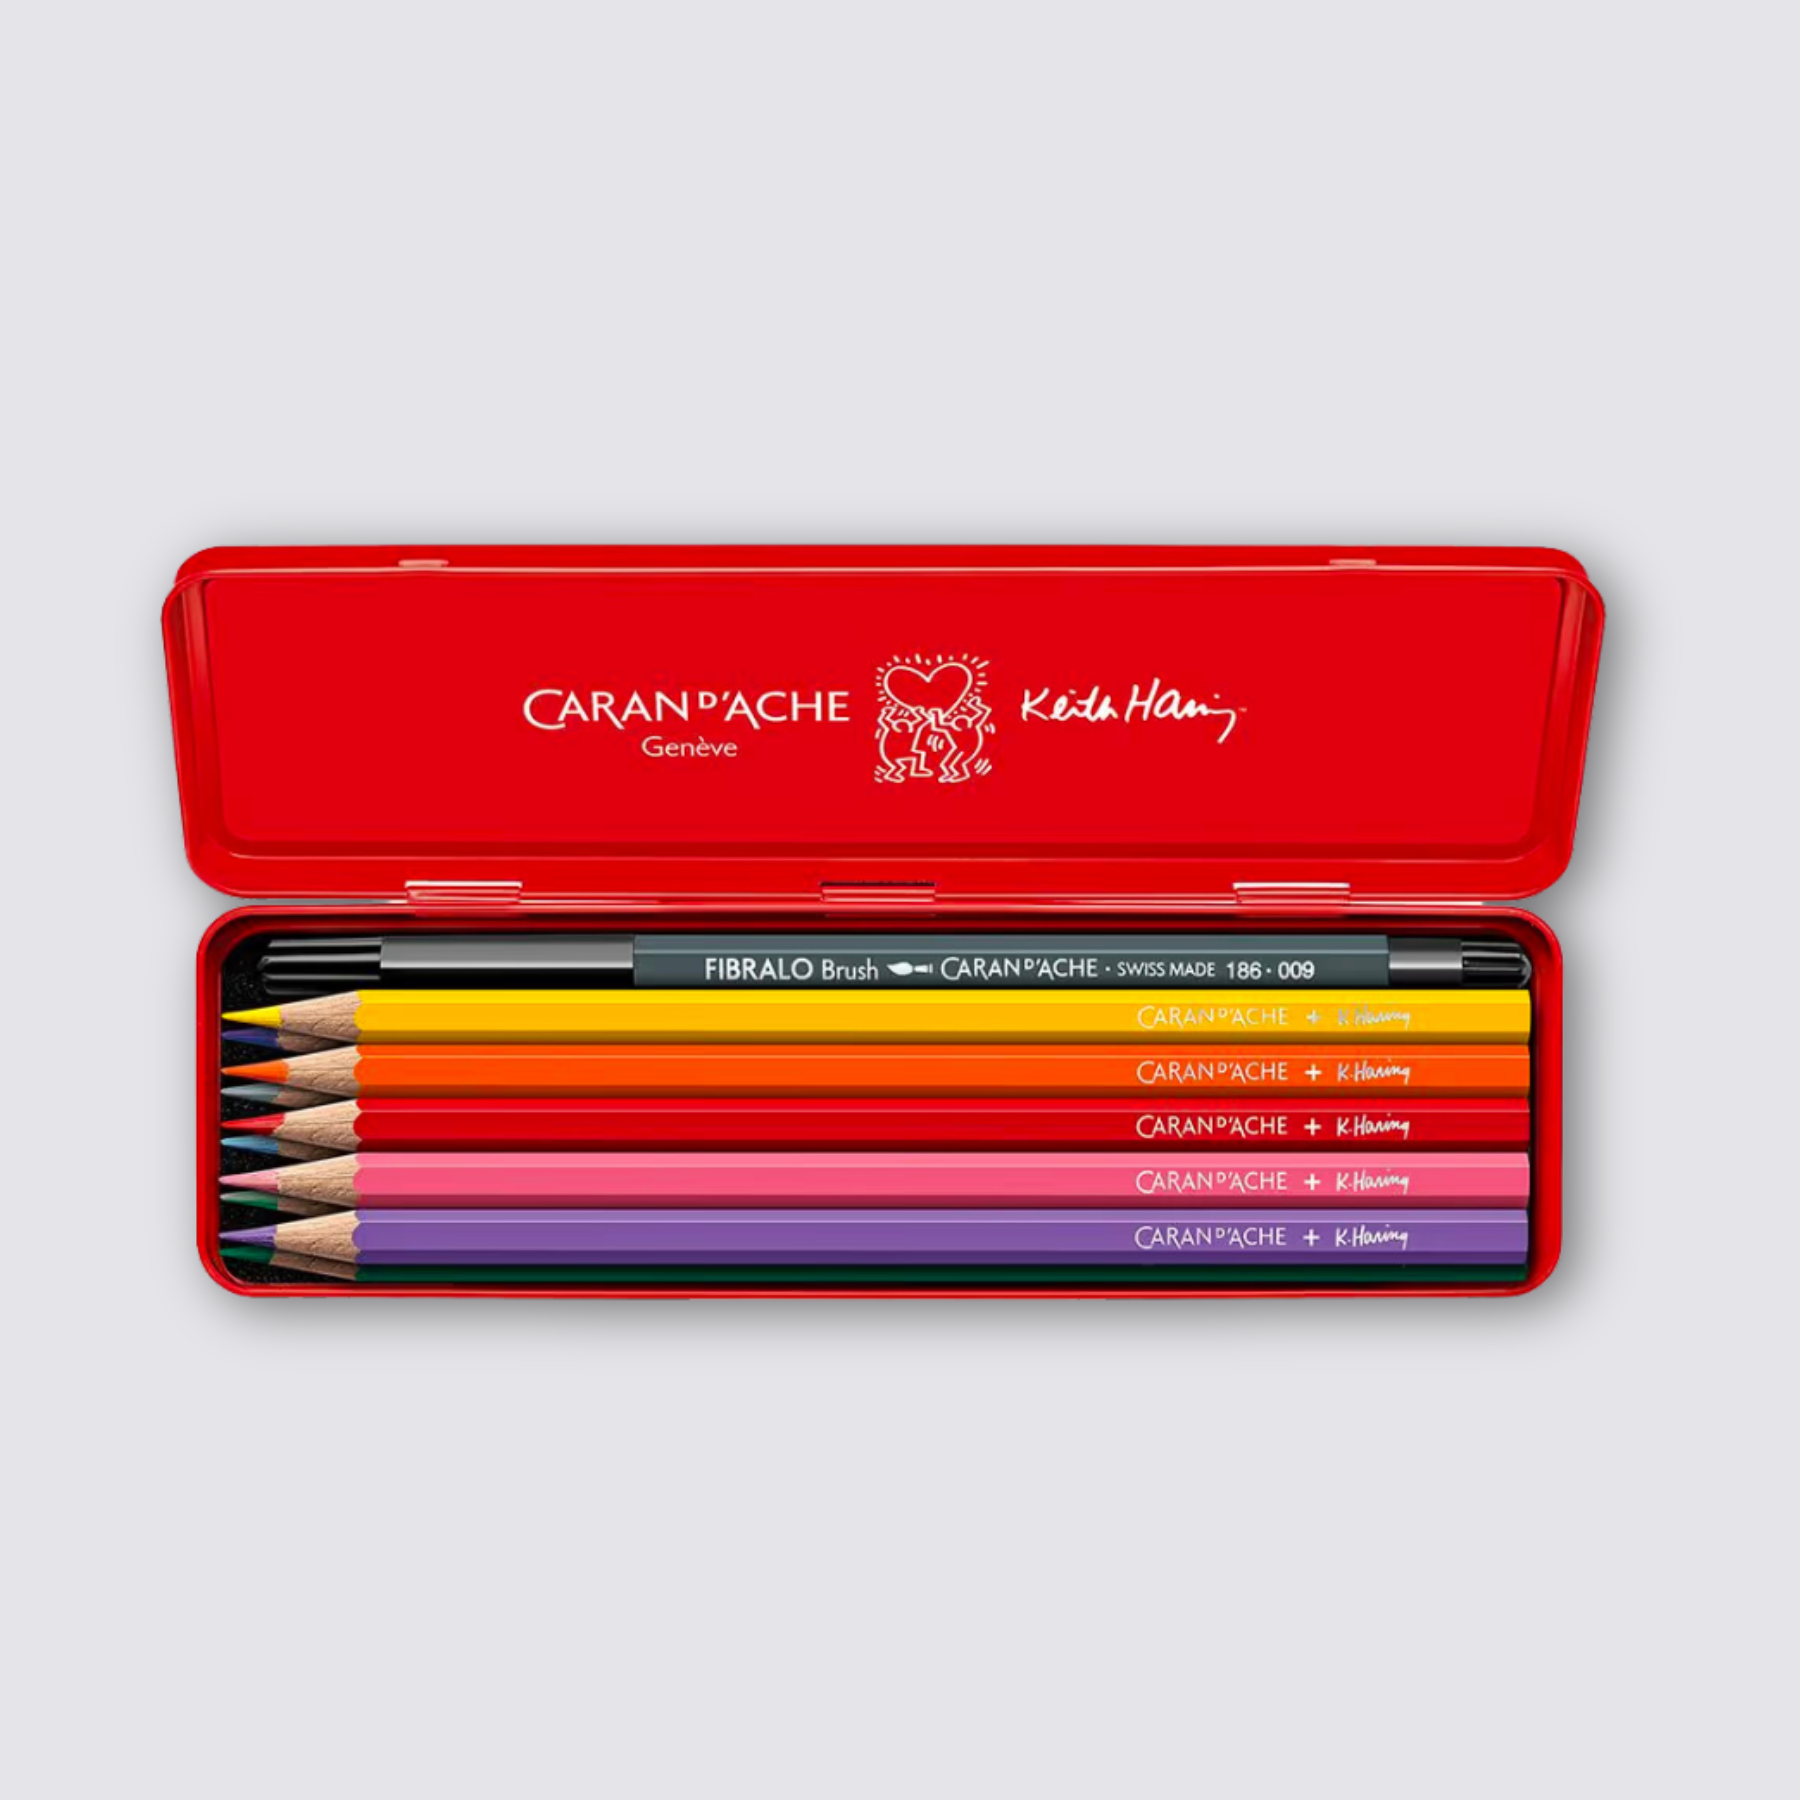 Caran d'ache keith haring colouring pencil set